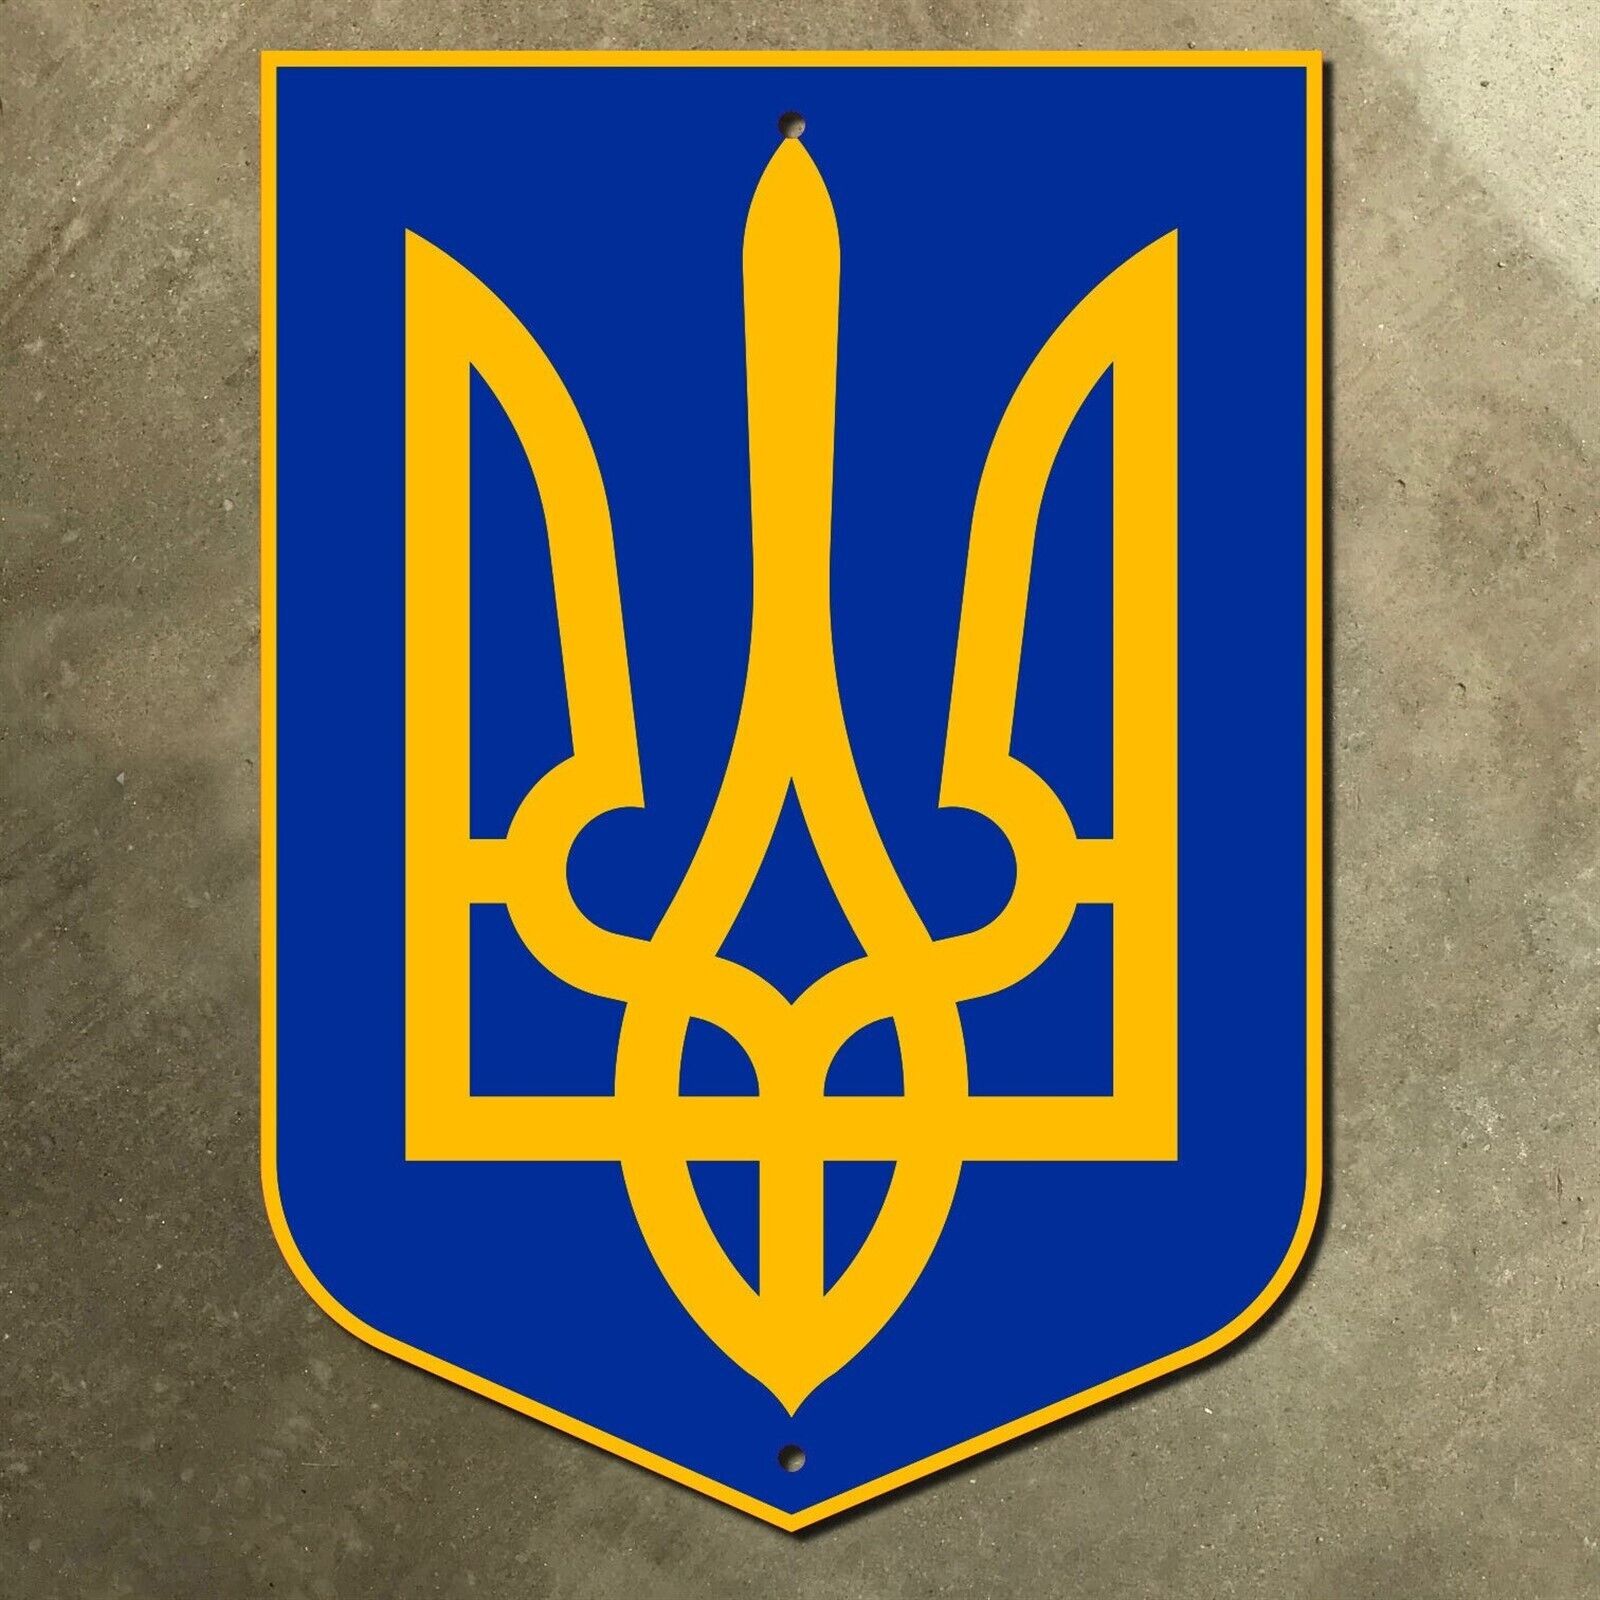 Ukraine trident coat of arms sign emblem shield 17x24 PROCEEDS TO UKRAINE RELIEF